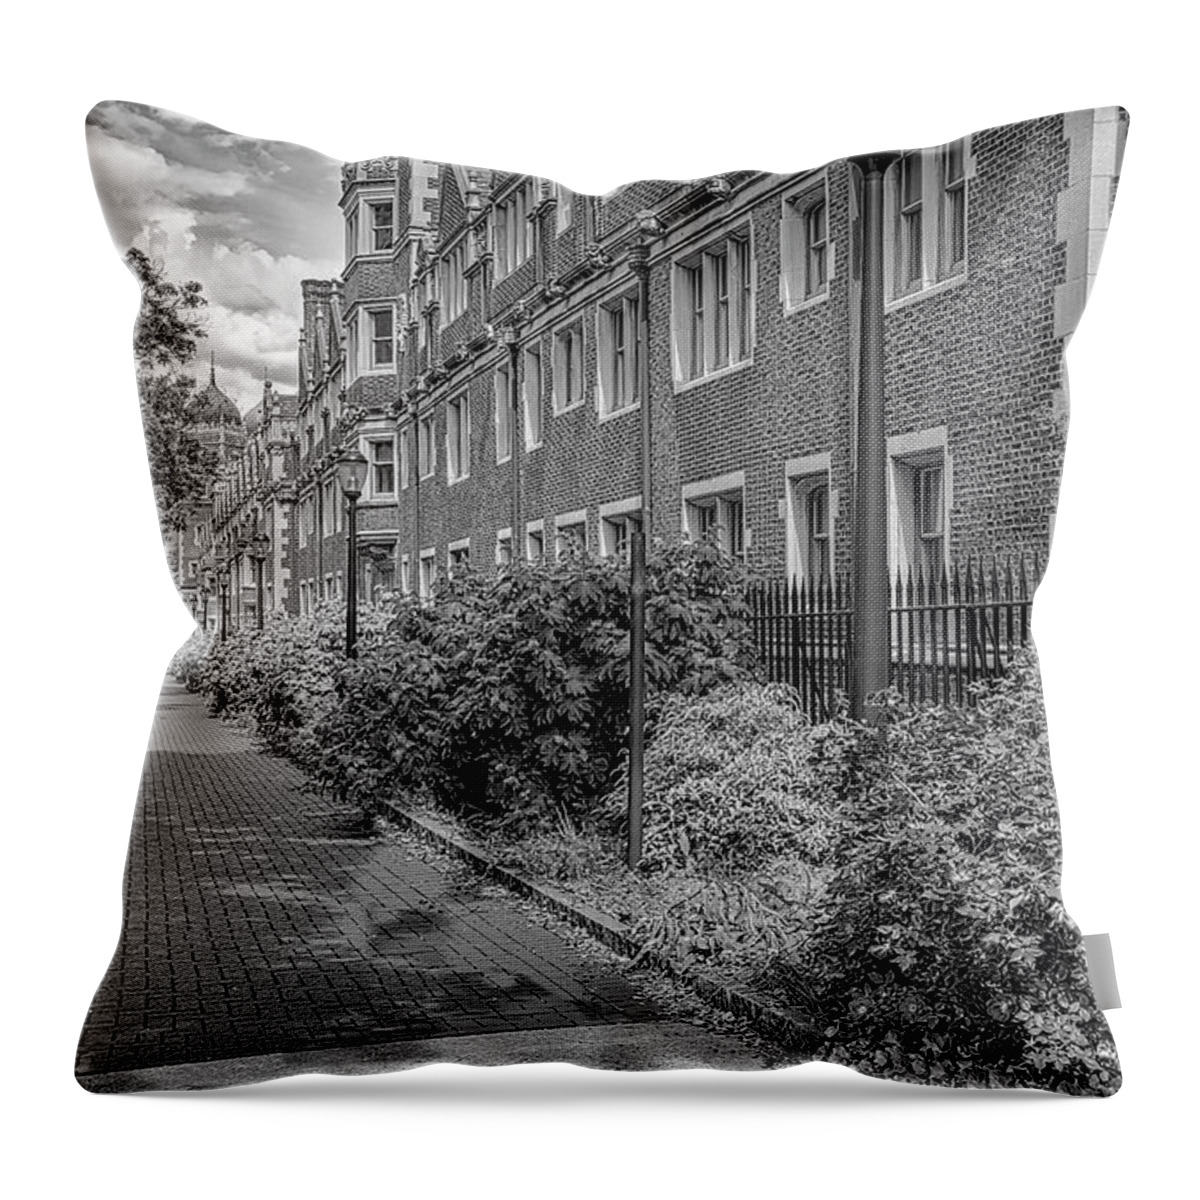 U-penn Throw Pillow featuring the photograph Quadrangle Dorms University of Pennsylvania #1 by Susan Candelario